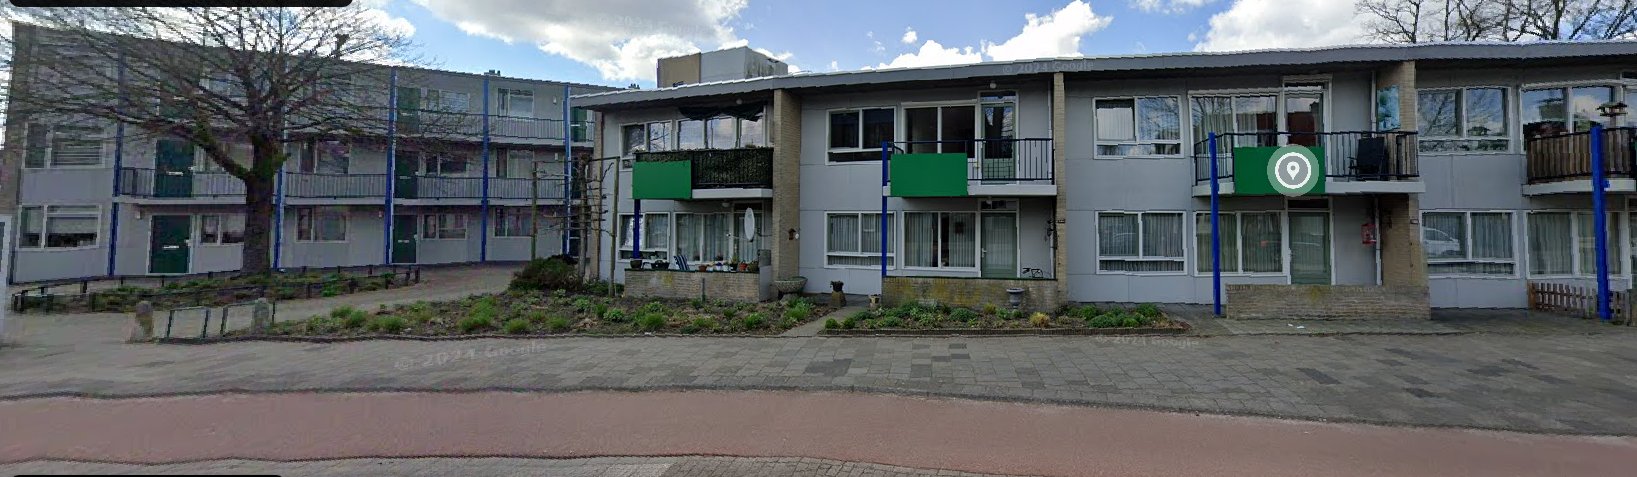 't Hofke 186, 5641 AN Eindhoven, Nederland